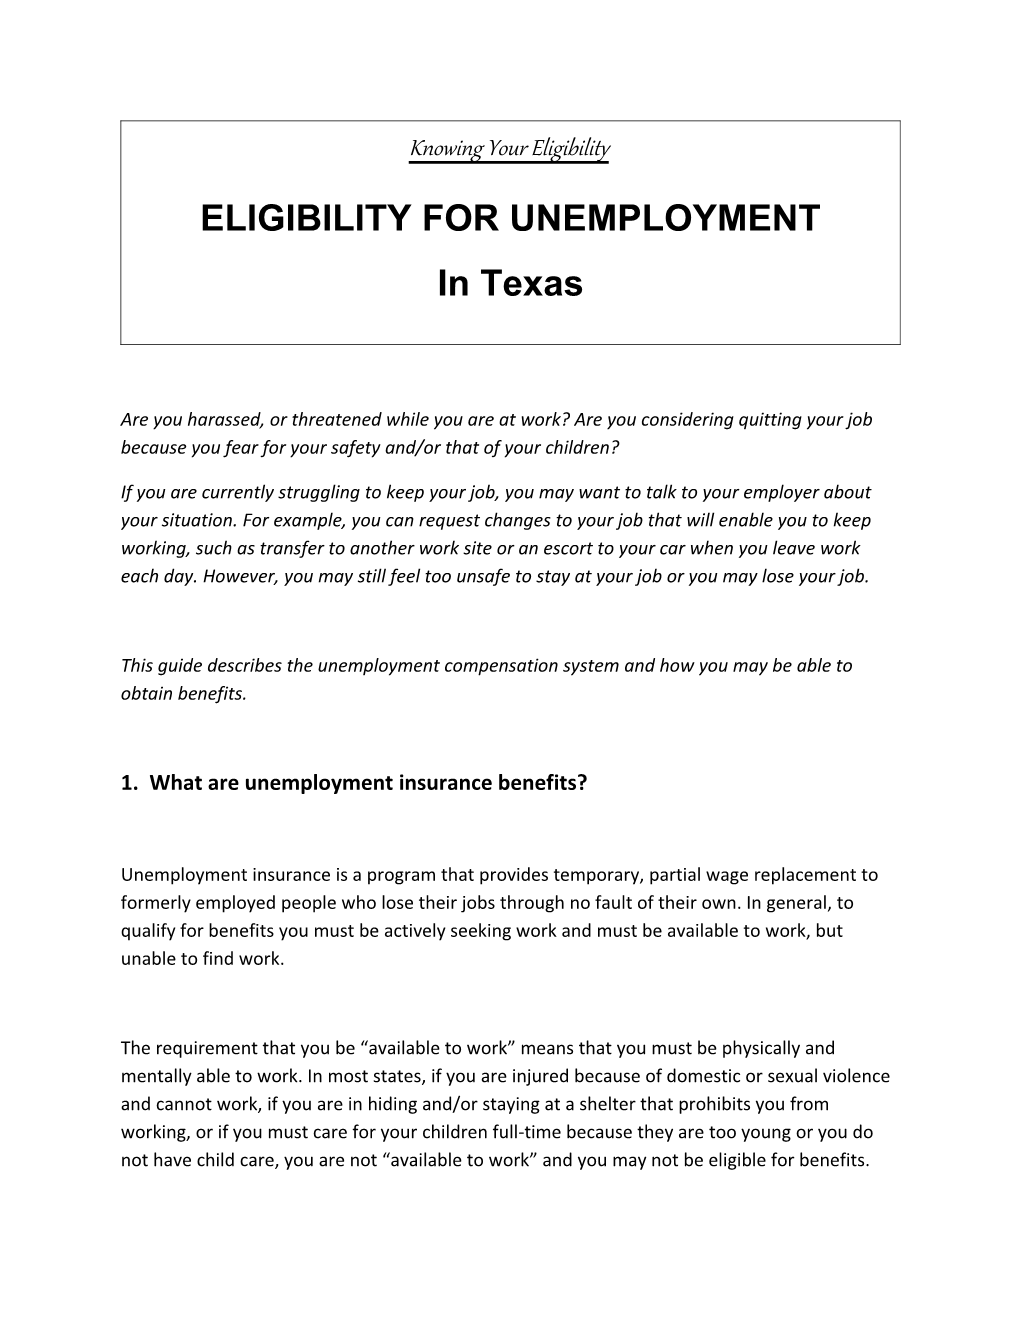 Eligibility for Unemployment